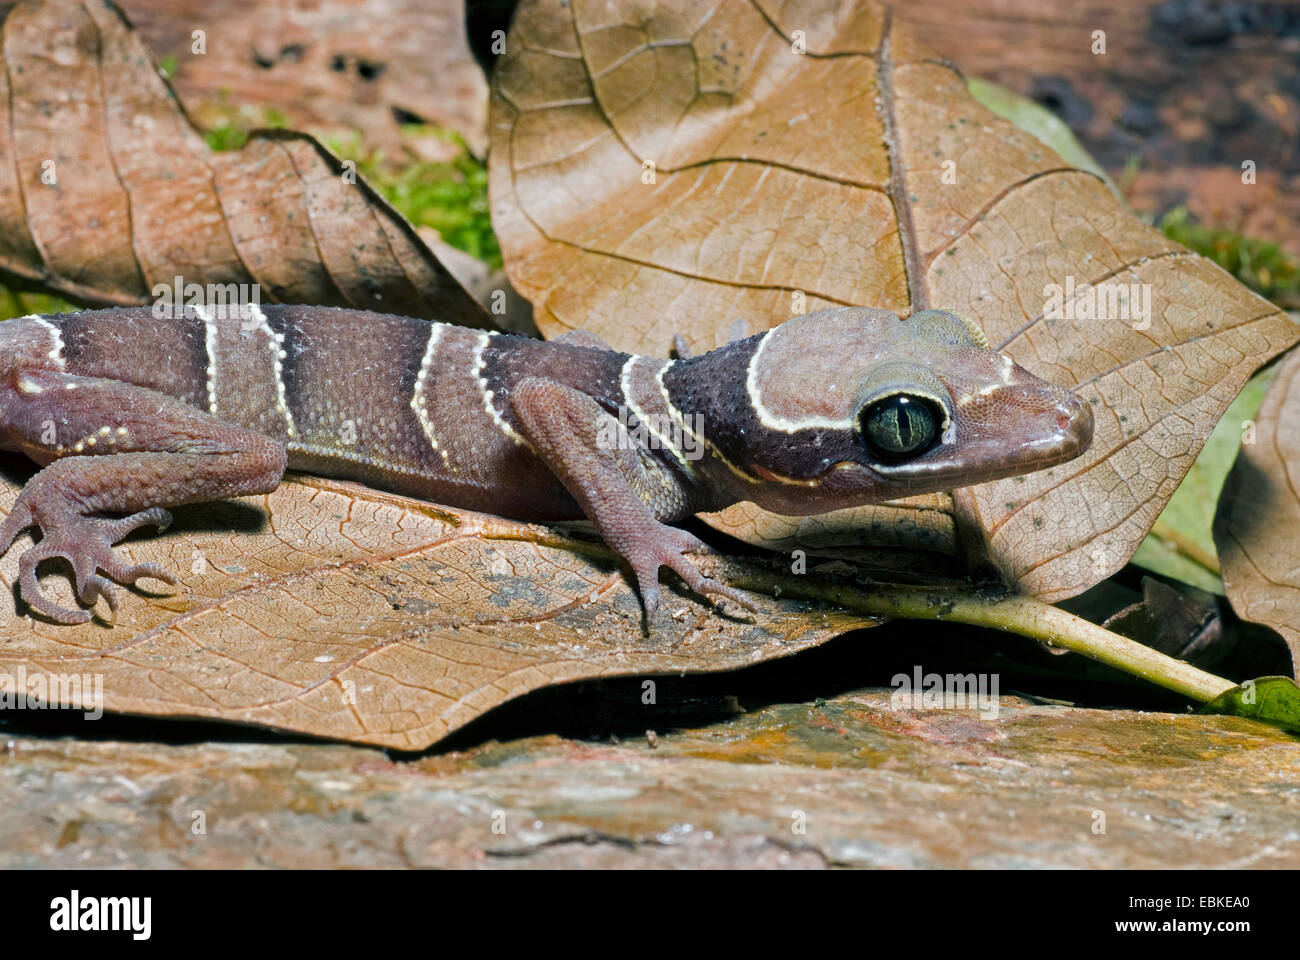 Malayan Forest Gecko (Cyrtodactylus pulchellus), close-up view Stock Photo